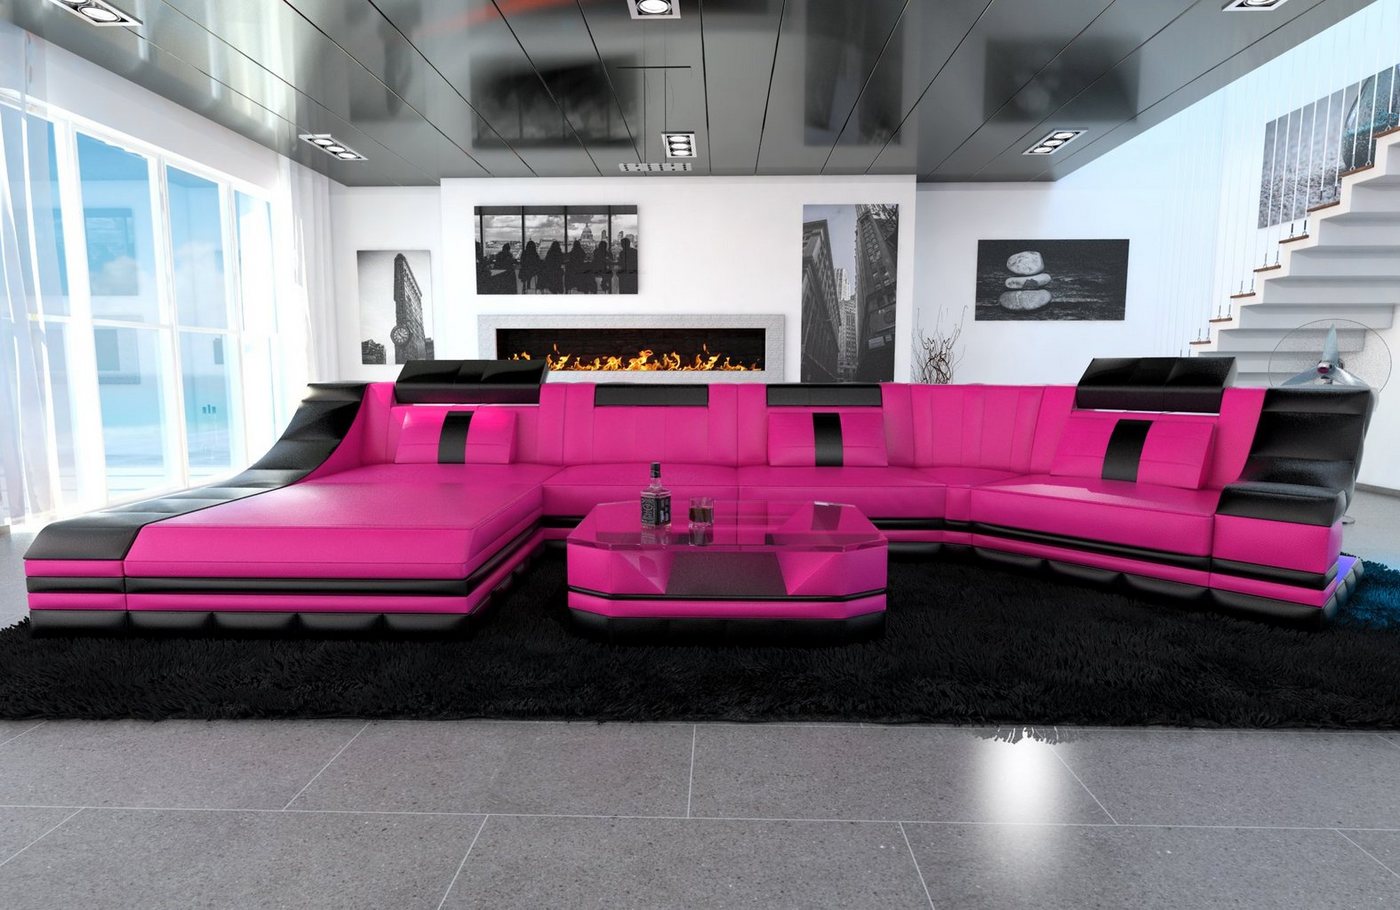 Sofa Dreams Wohnlandschaft Ledercouch Turino C Form Ledersofa Leder Sofa, Couch, mit LED, wahlweise mit Bettfunktion als Schlafsofa, Designersofa von Sofa Dreams